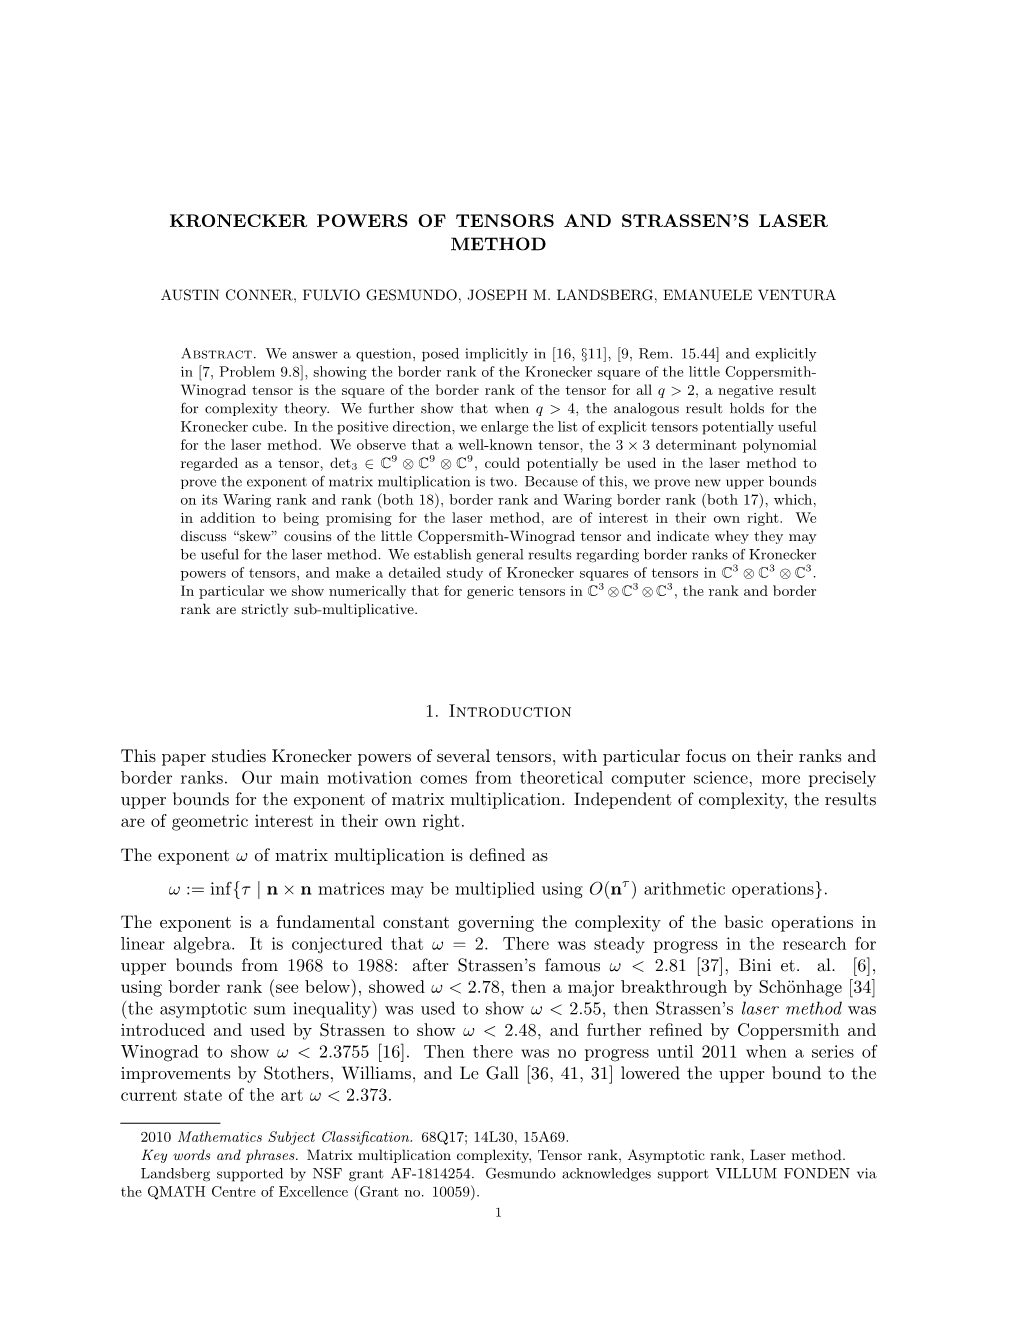 Kronecker Powers of Tensors Useful for Strassen's Laser Method